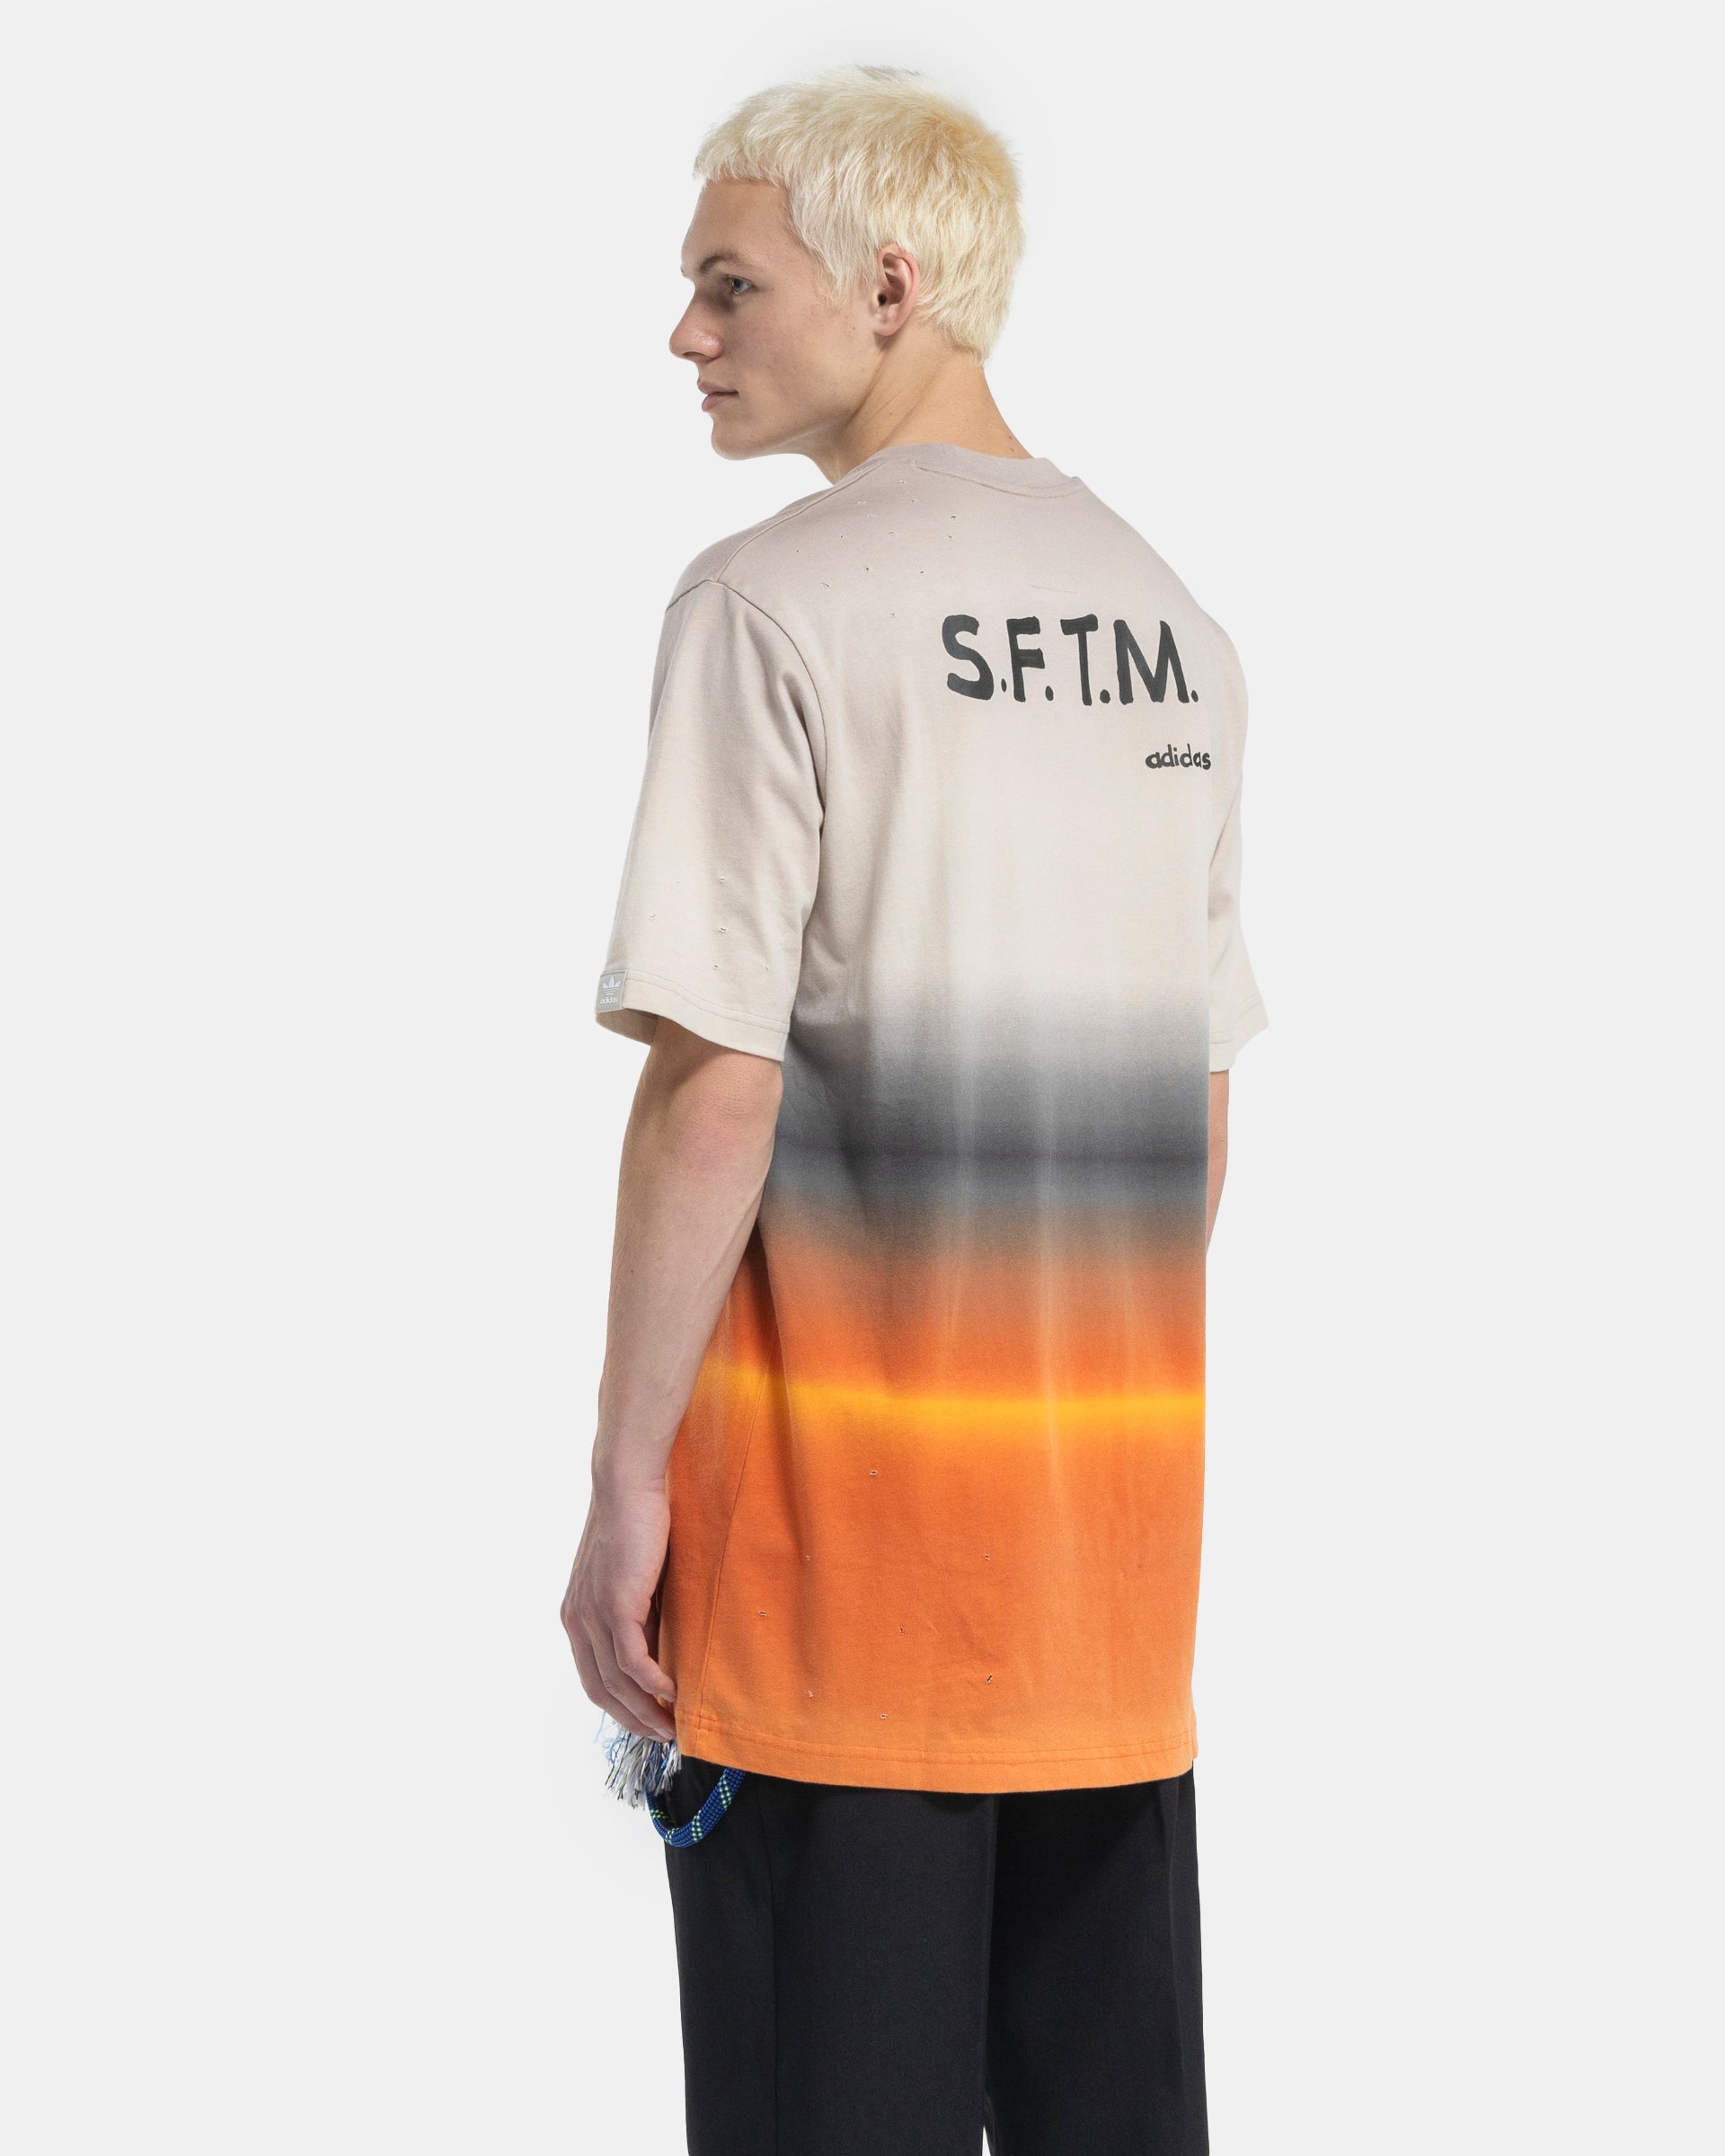 SFTM T-Shirt in Beige and Orange